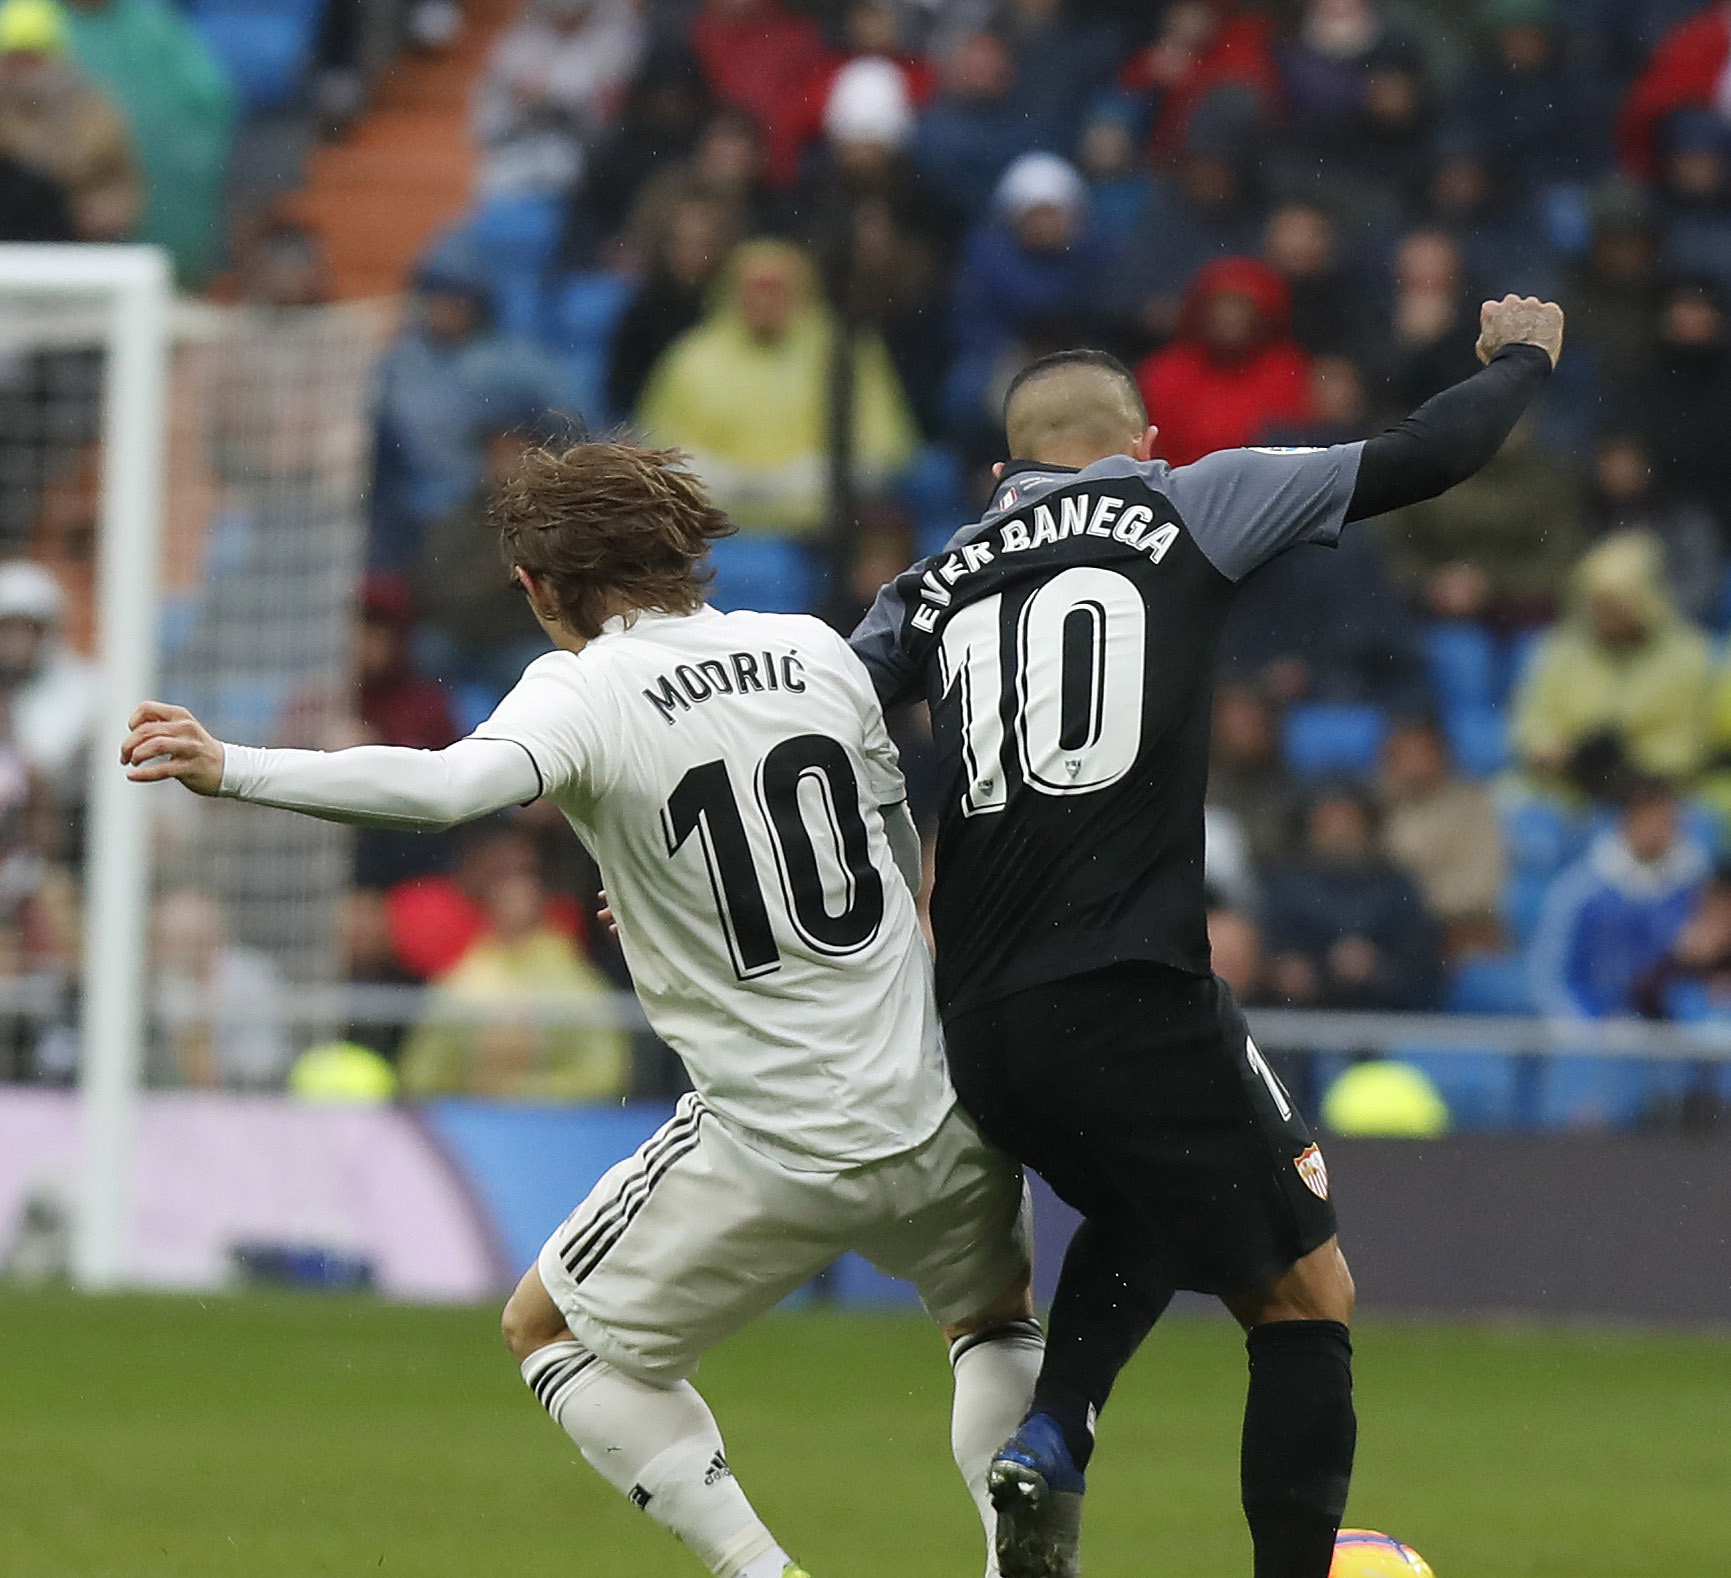 Banega challenges Modric for the ball